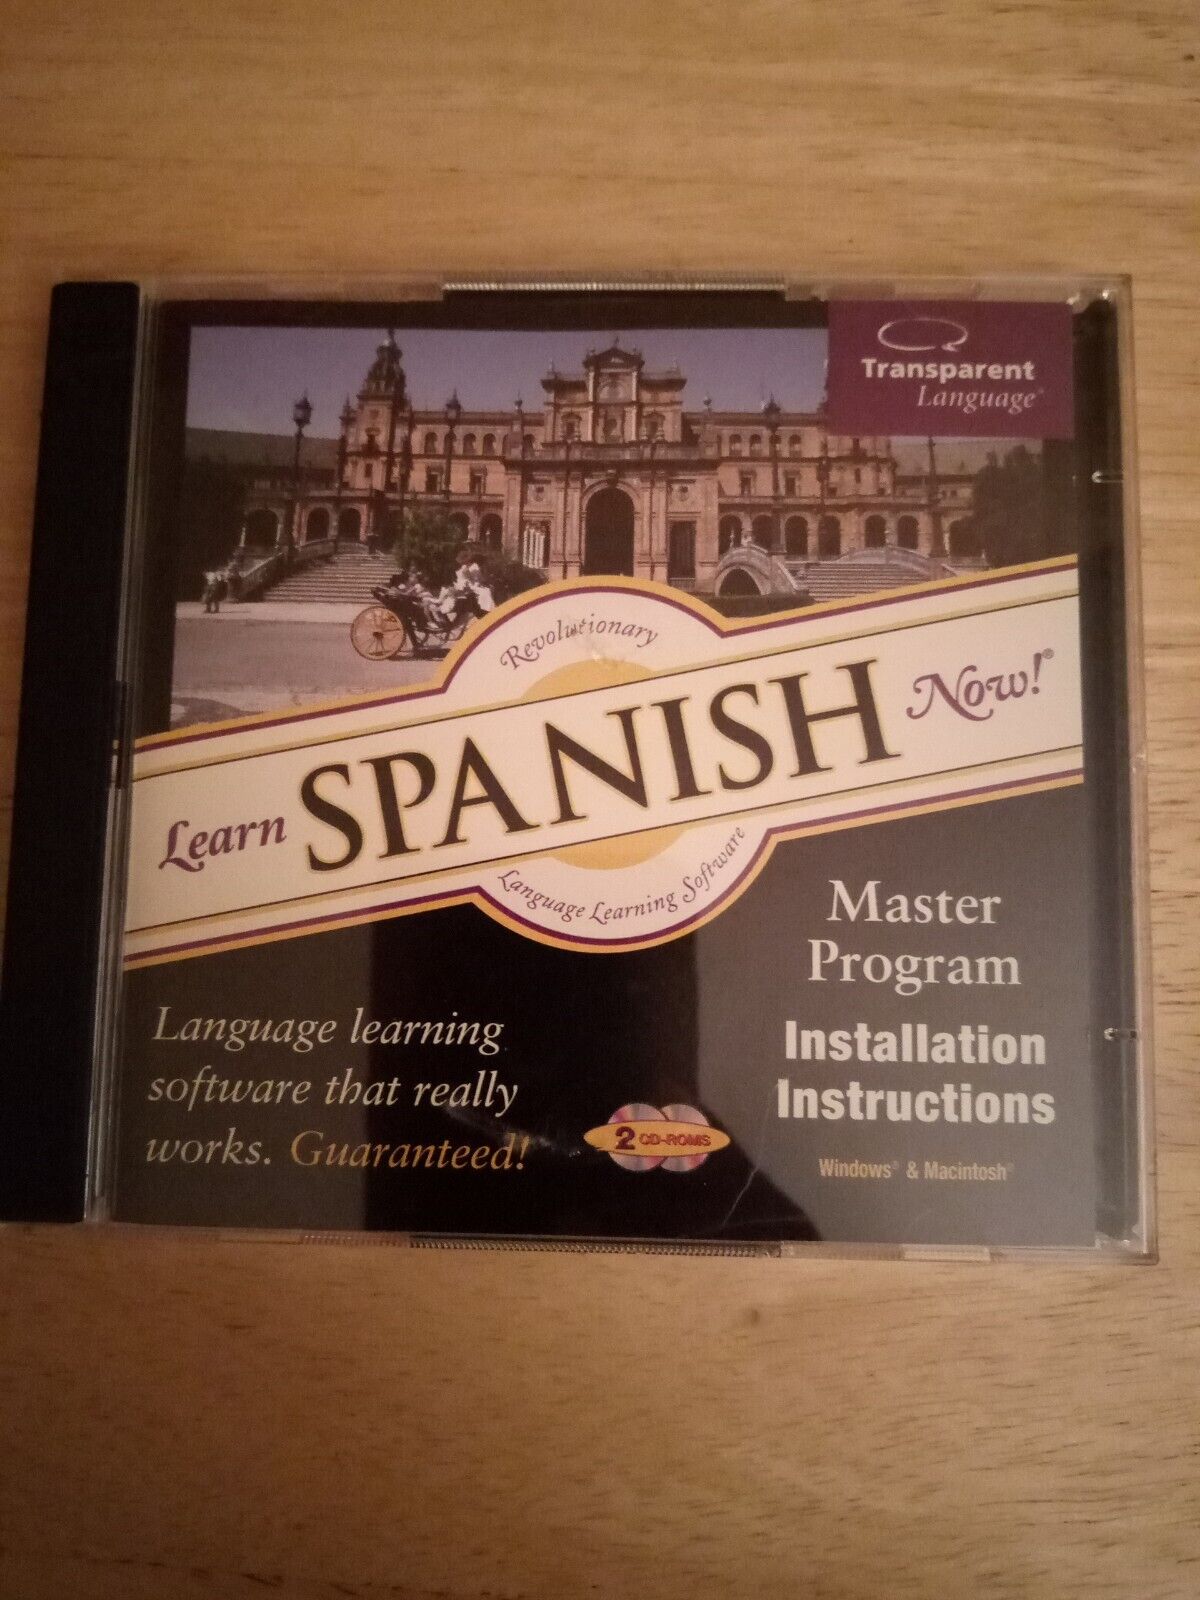 Learn Spanish Now Transparent Language Master Program Version 7 CD 2 CD Set USED